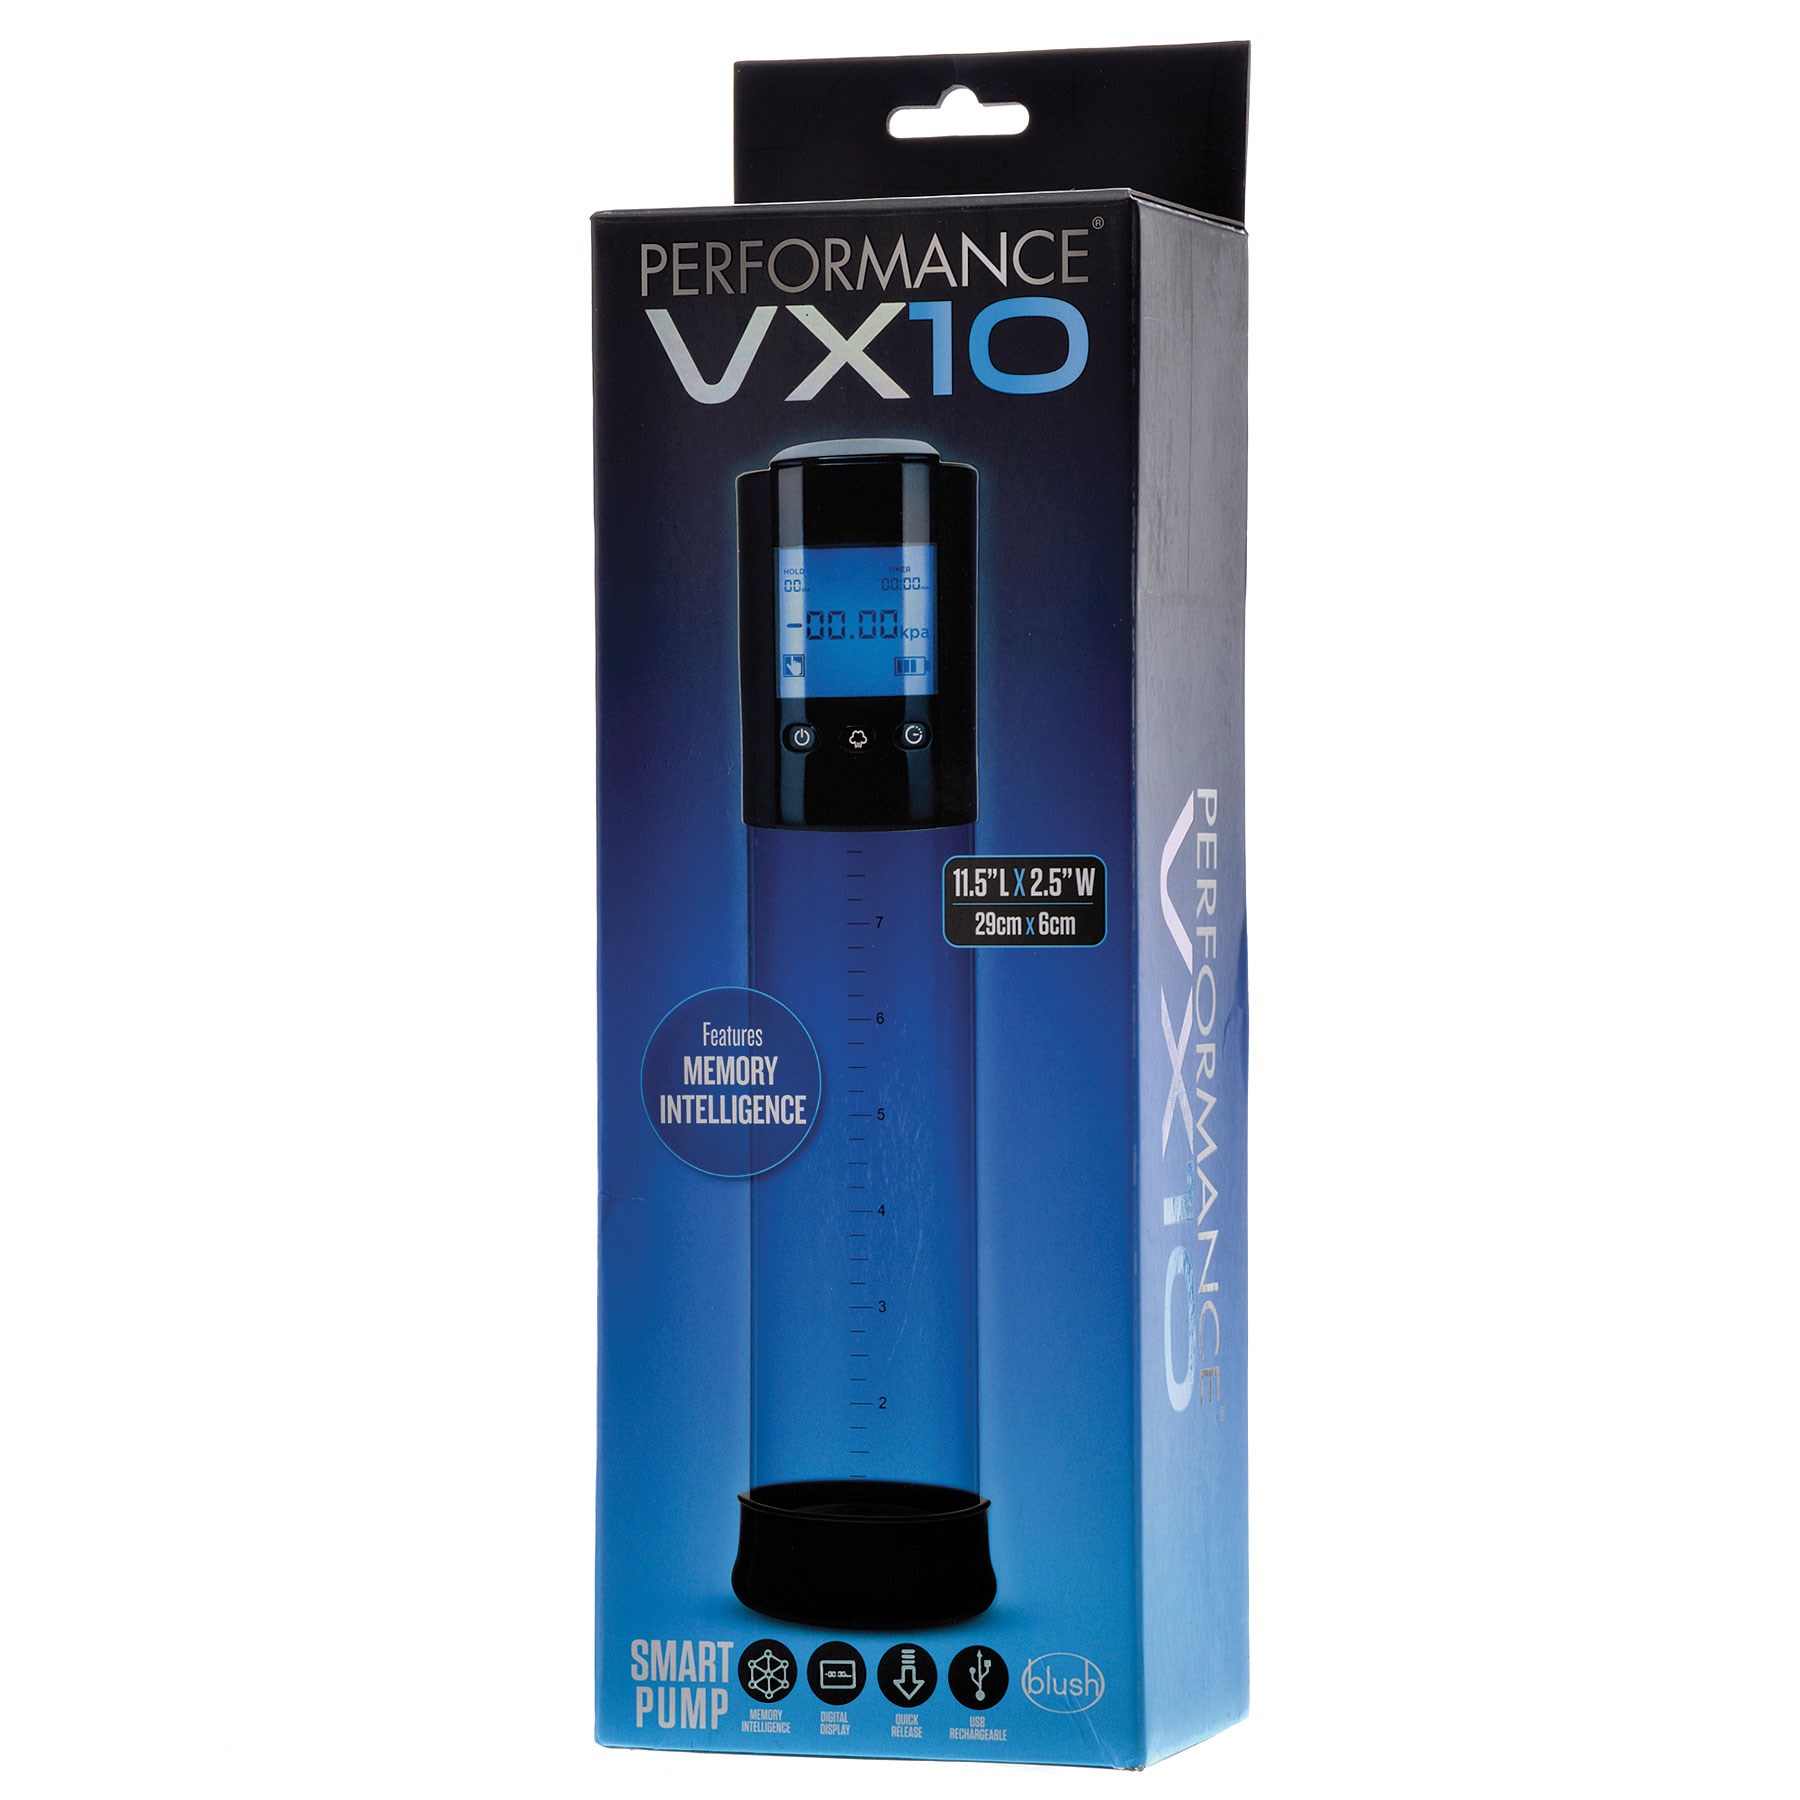 Performance Vx10 Smart Pump box